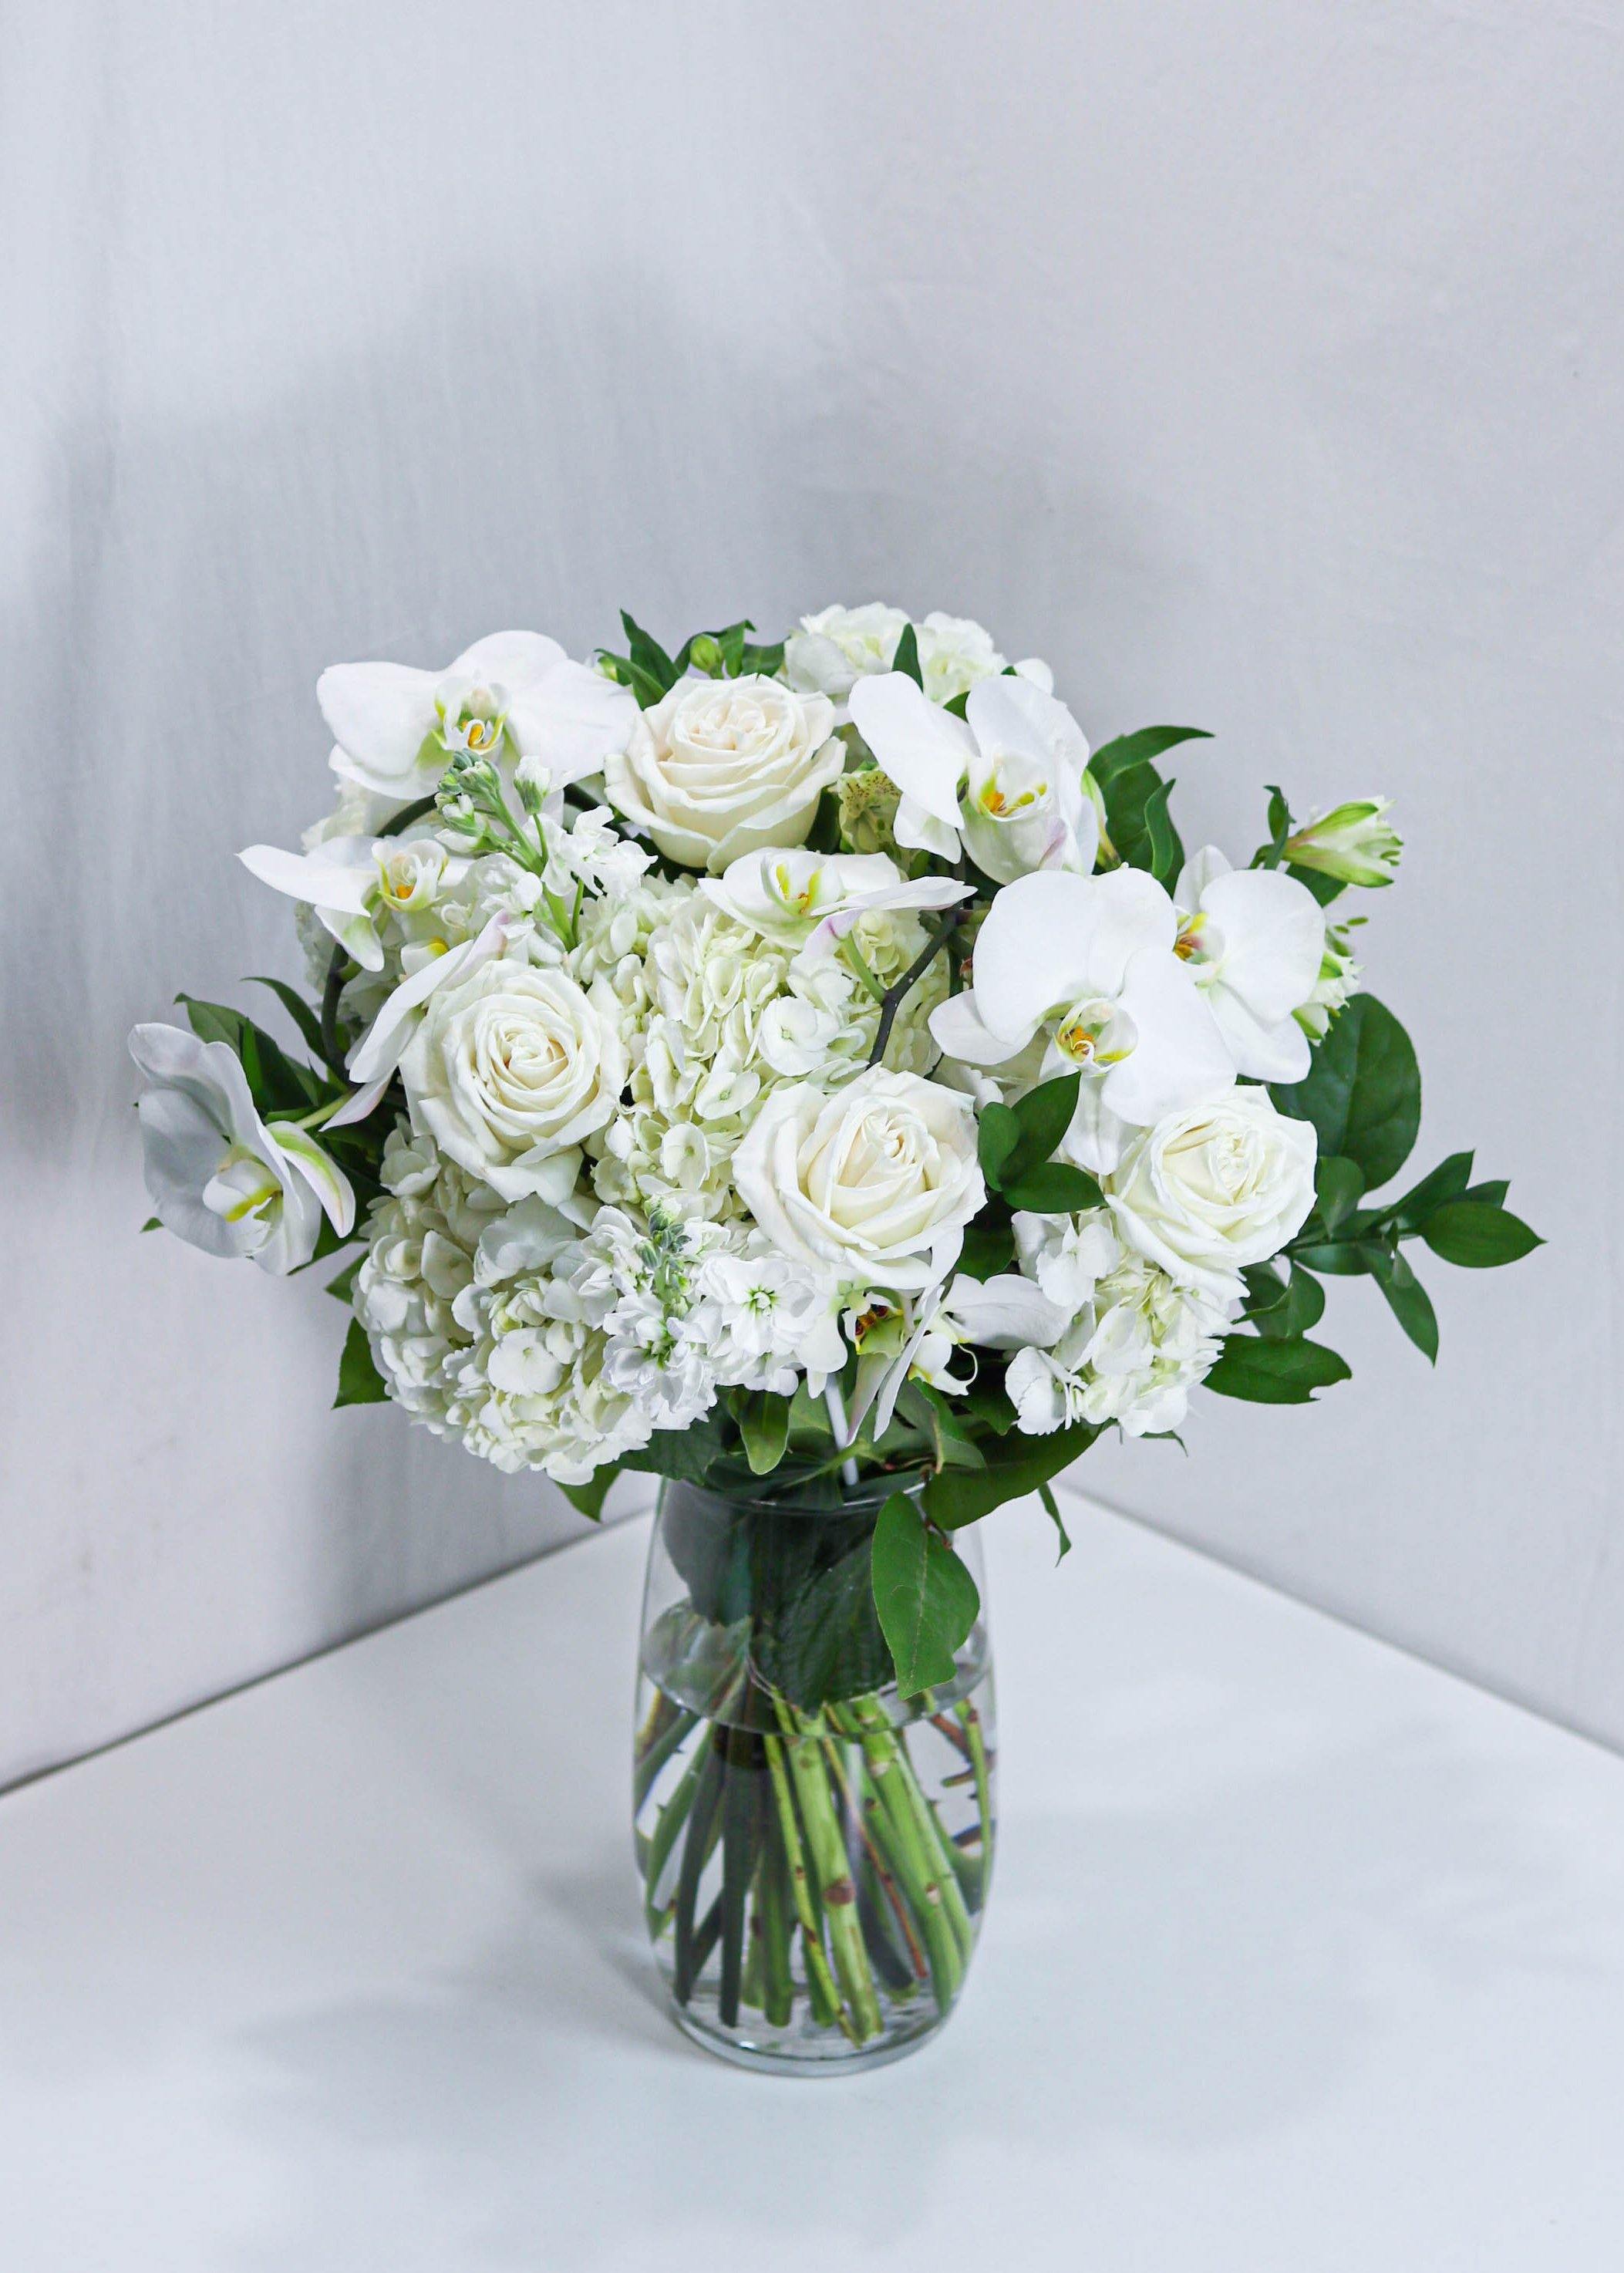 Wonderful in White - Toronto Flower Gallery